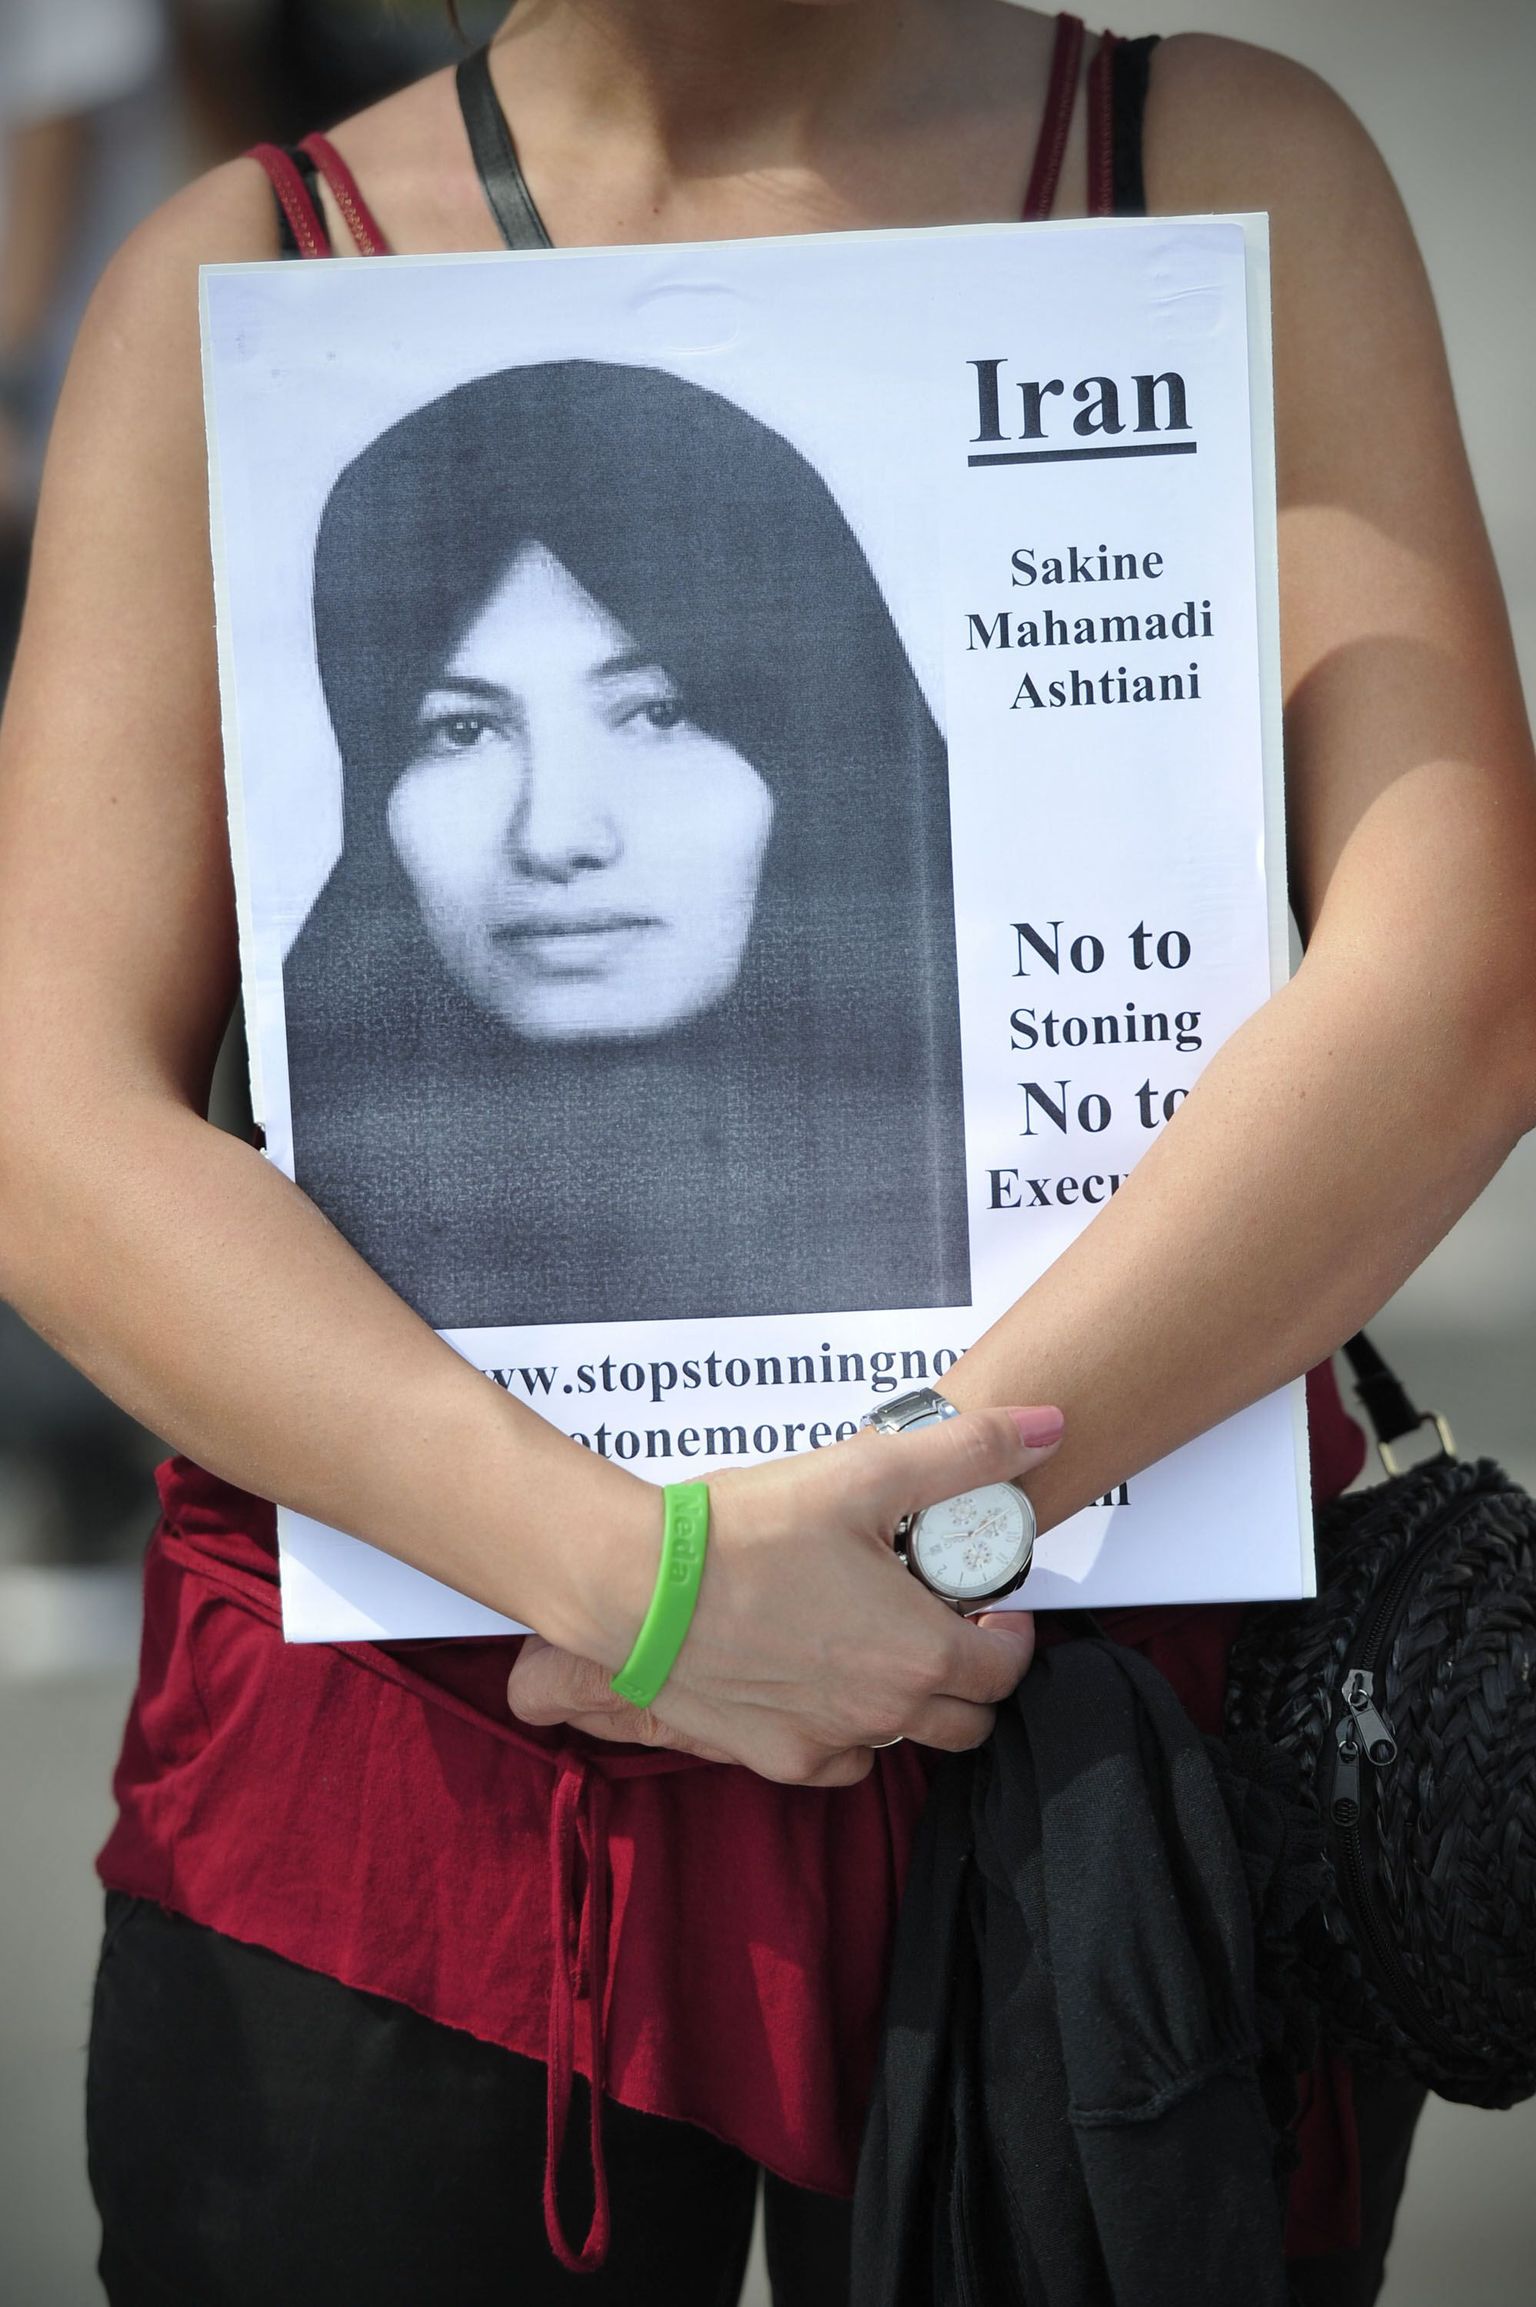 Londoni meeleavaldaja surmamõistetud iraanlanna Sakineh Mohammadi Ashtiani pildiga.